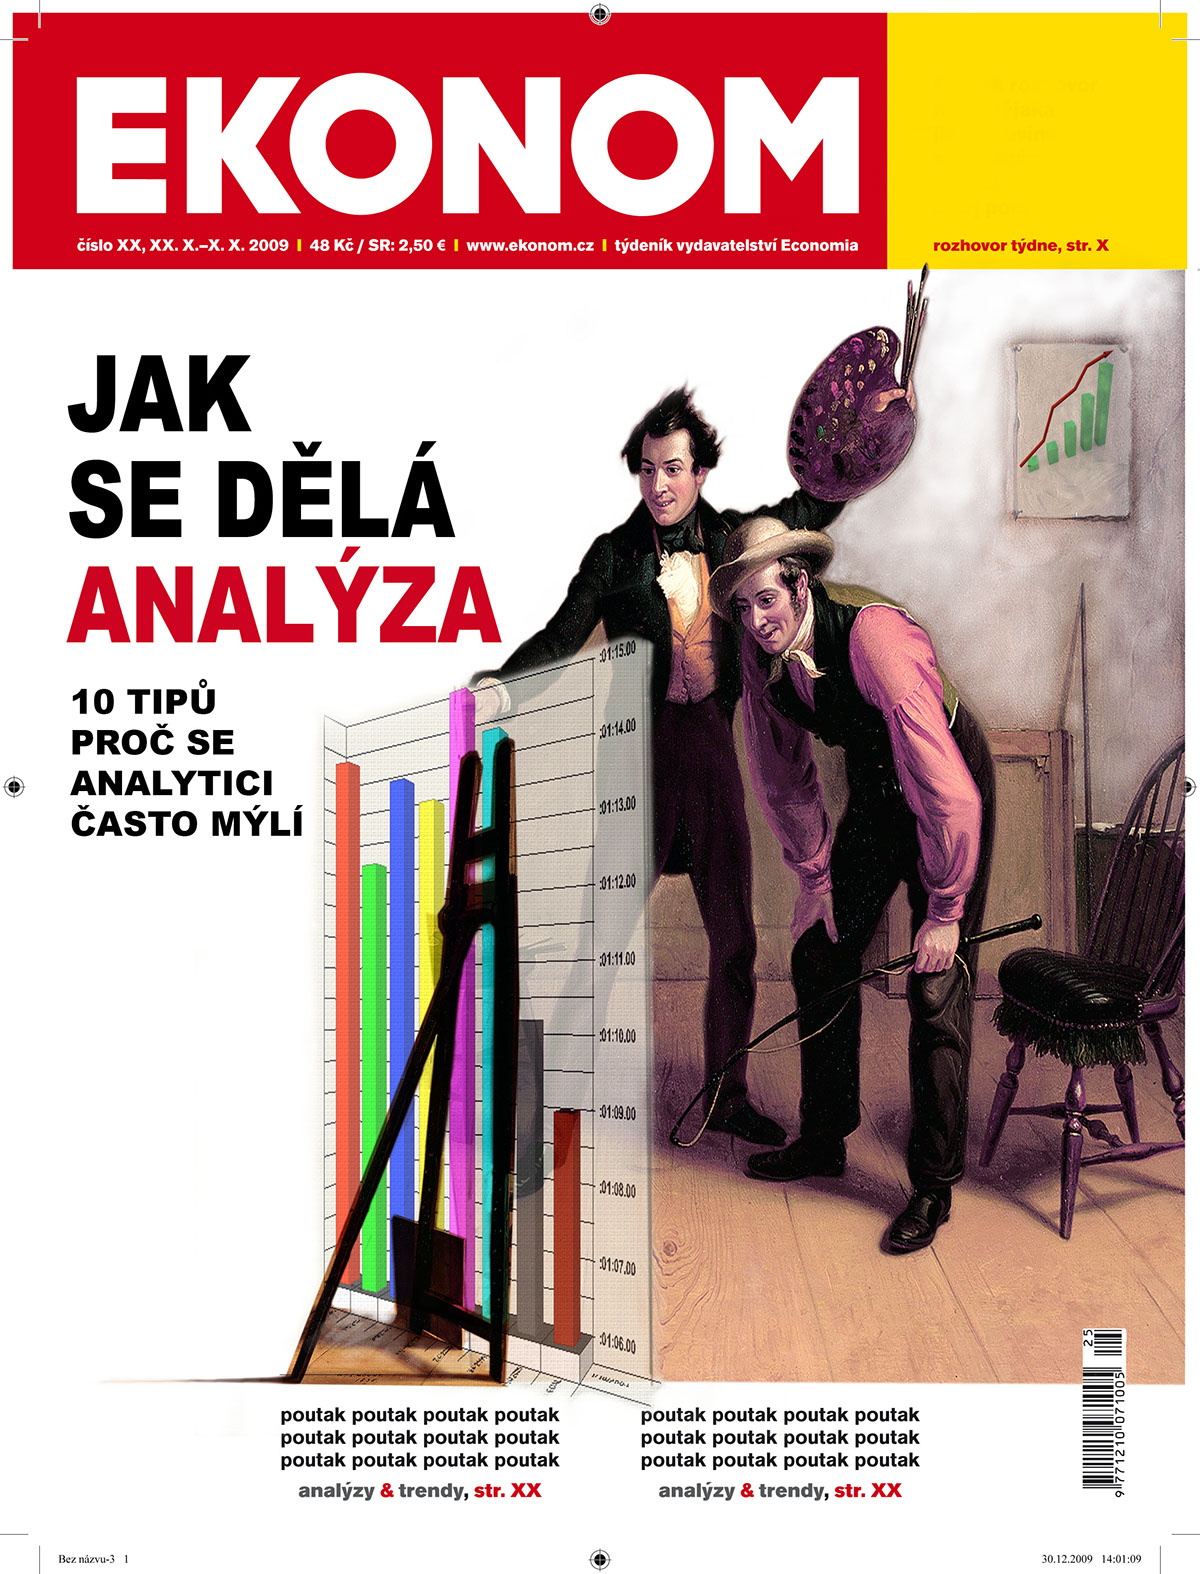 Ekonom illustrations cover magazine books political book cover